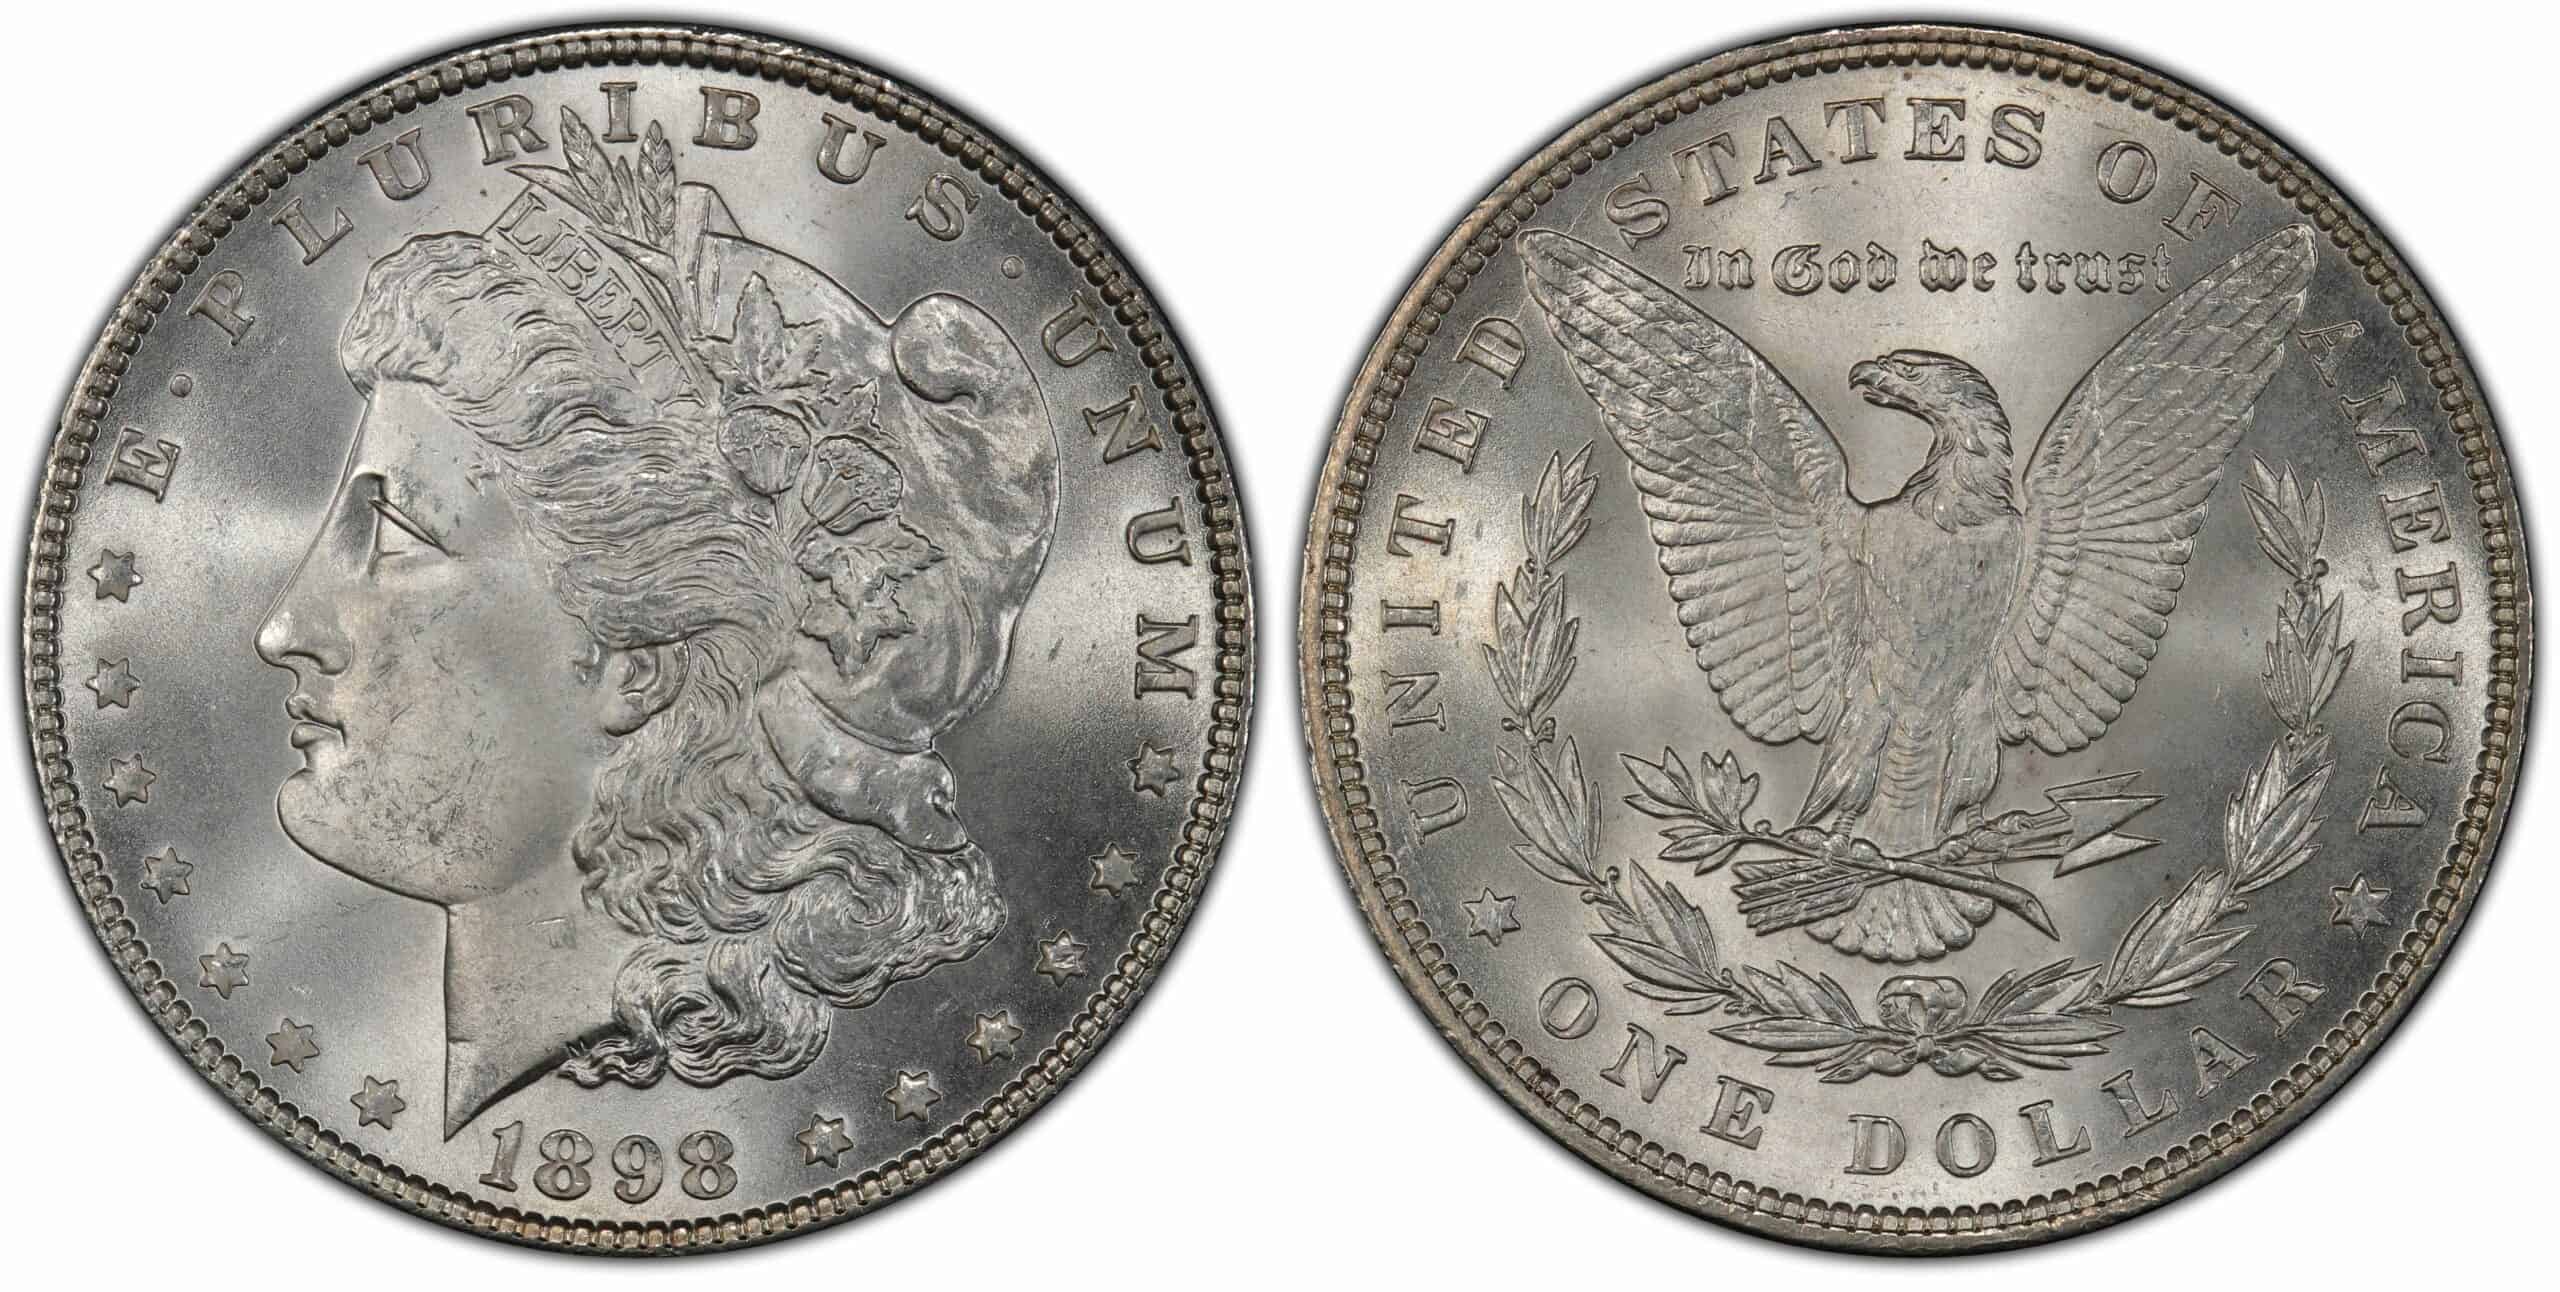 1898 Silver Dollar Value (Rare Errors, “O”, “S” & No Mint Marks)